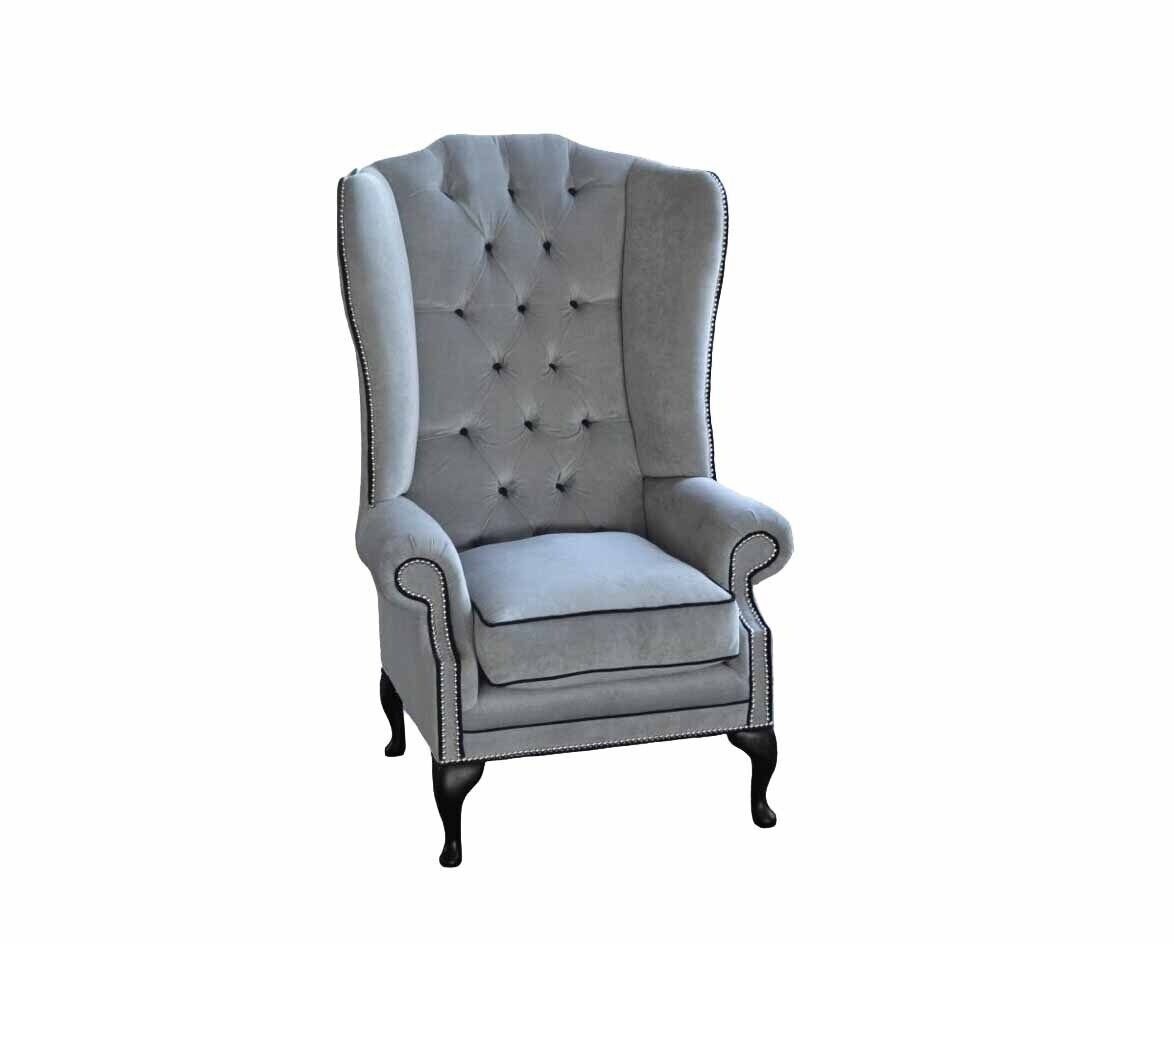 JVmoebel Ohrensessel Ohrensessel Chesterfield 1 Sitzer Sessel Textil Polster Sofa Couch Neu, Made In Europe